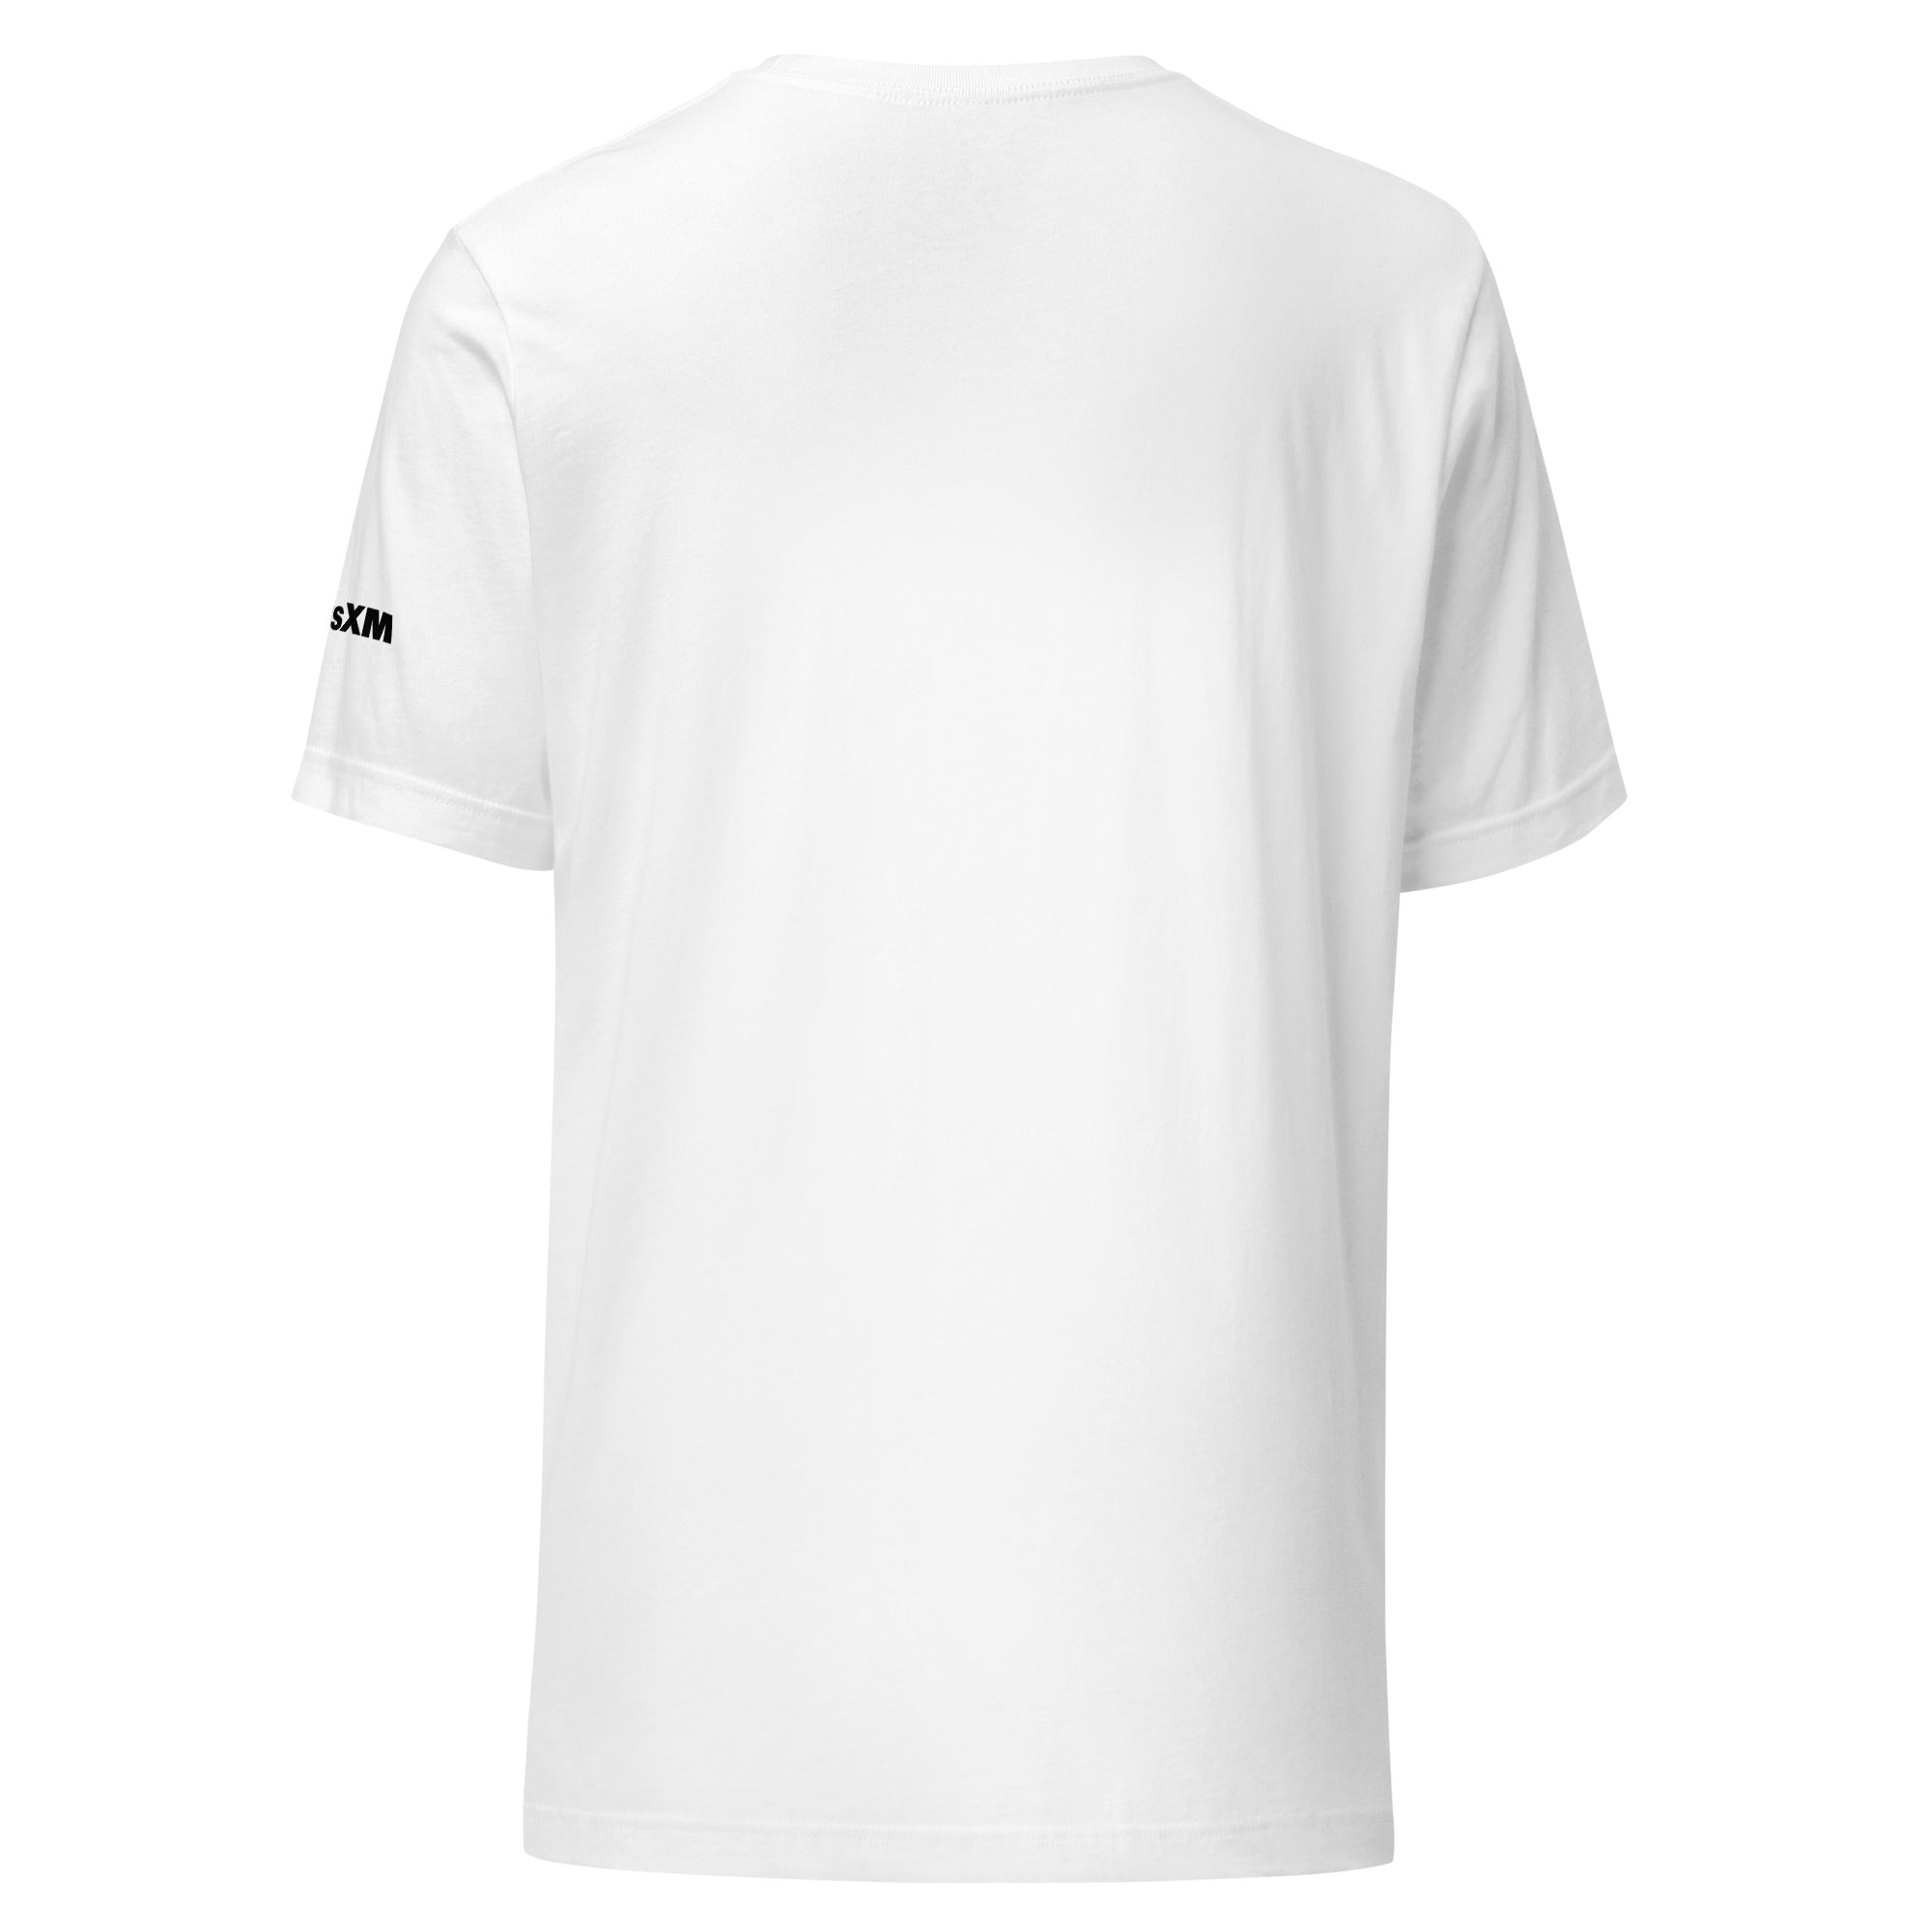 Conan O'Brien Radio: T-shirt (White)